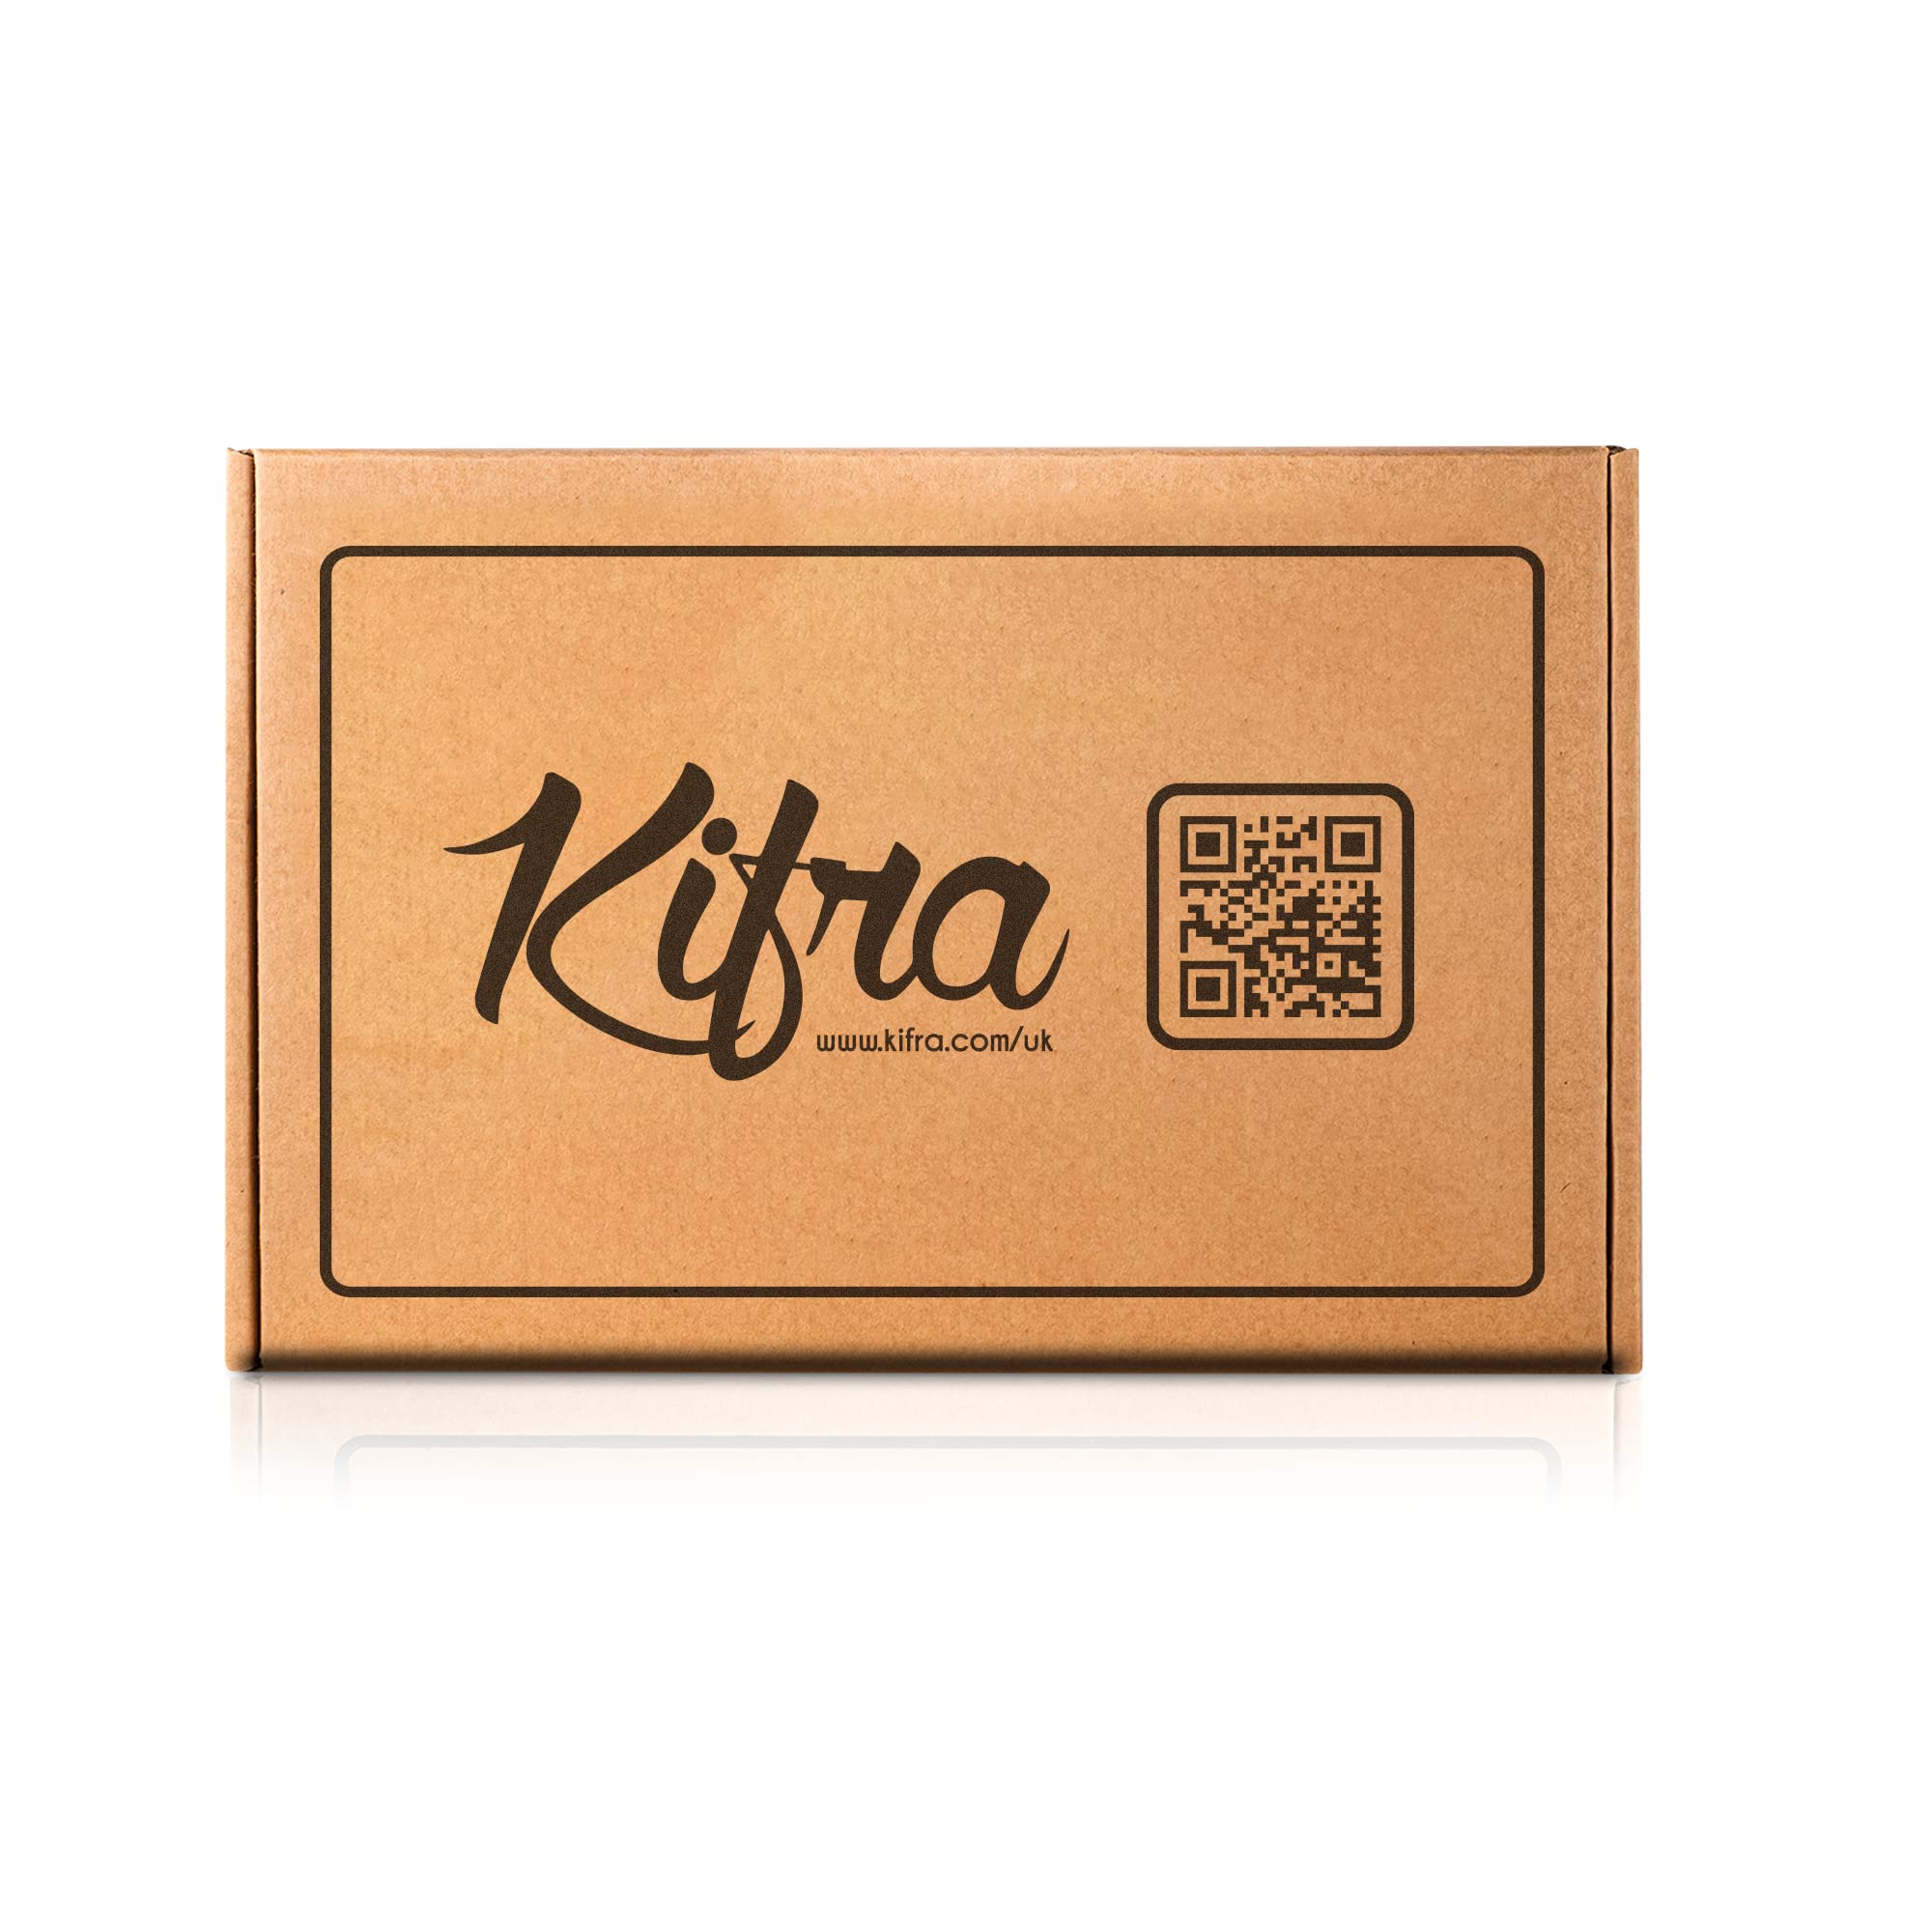 Kifra Ocean & Fresh Caps Fabric Softener Perfume